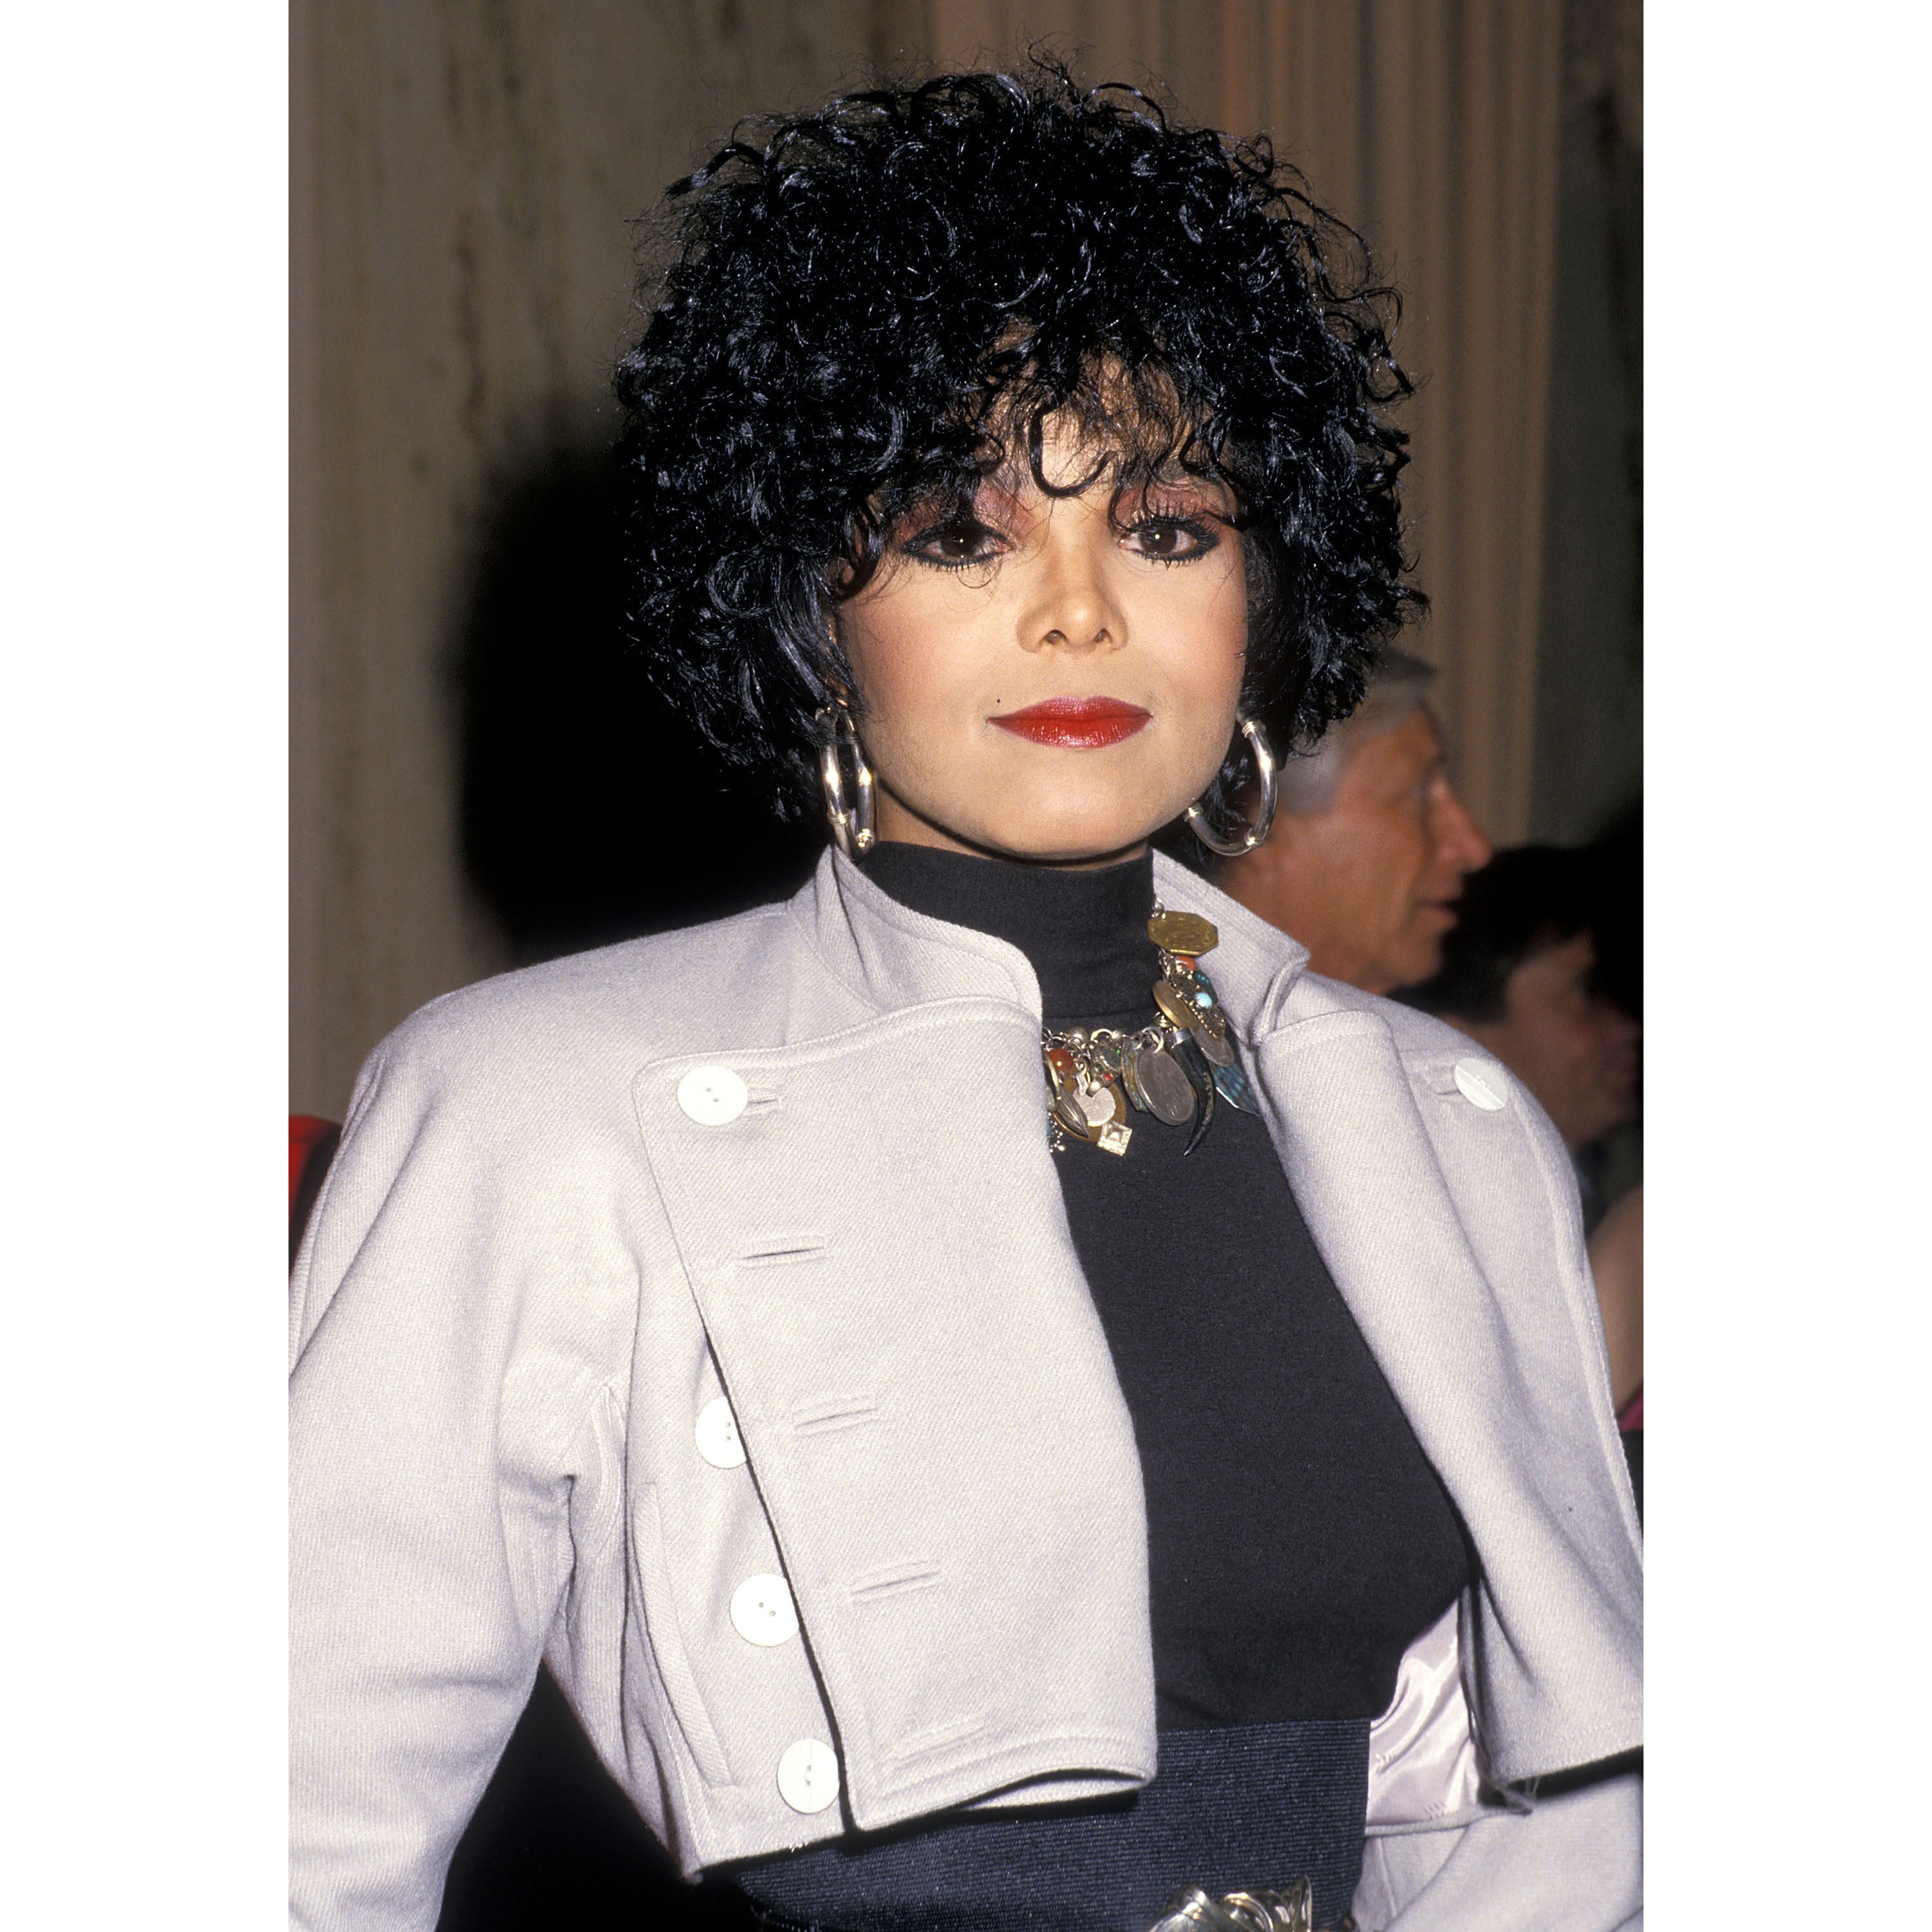 Janet Jackson's Most Fabulous Looks
